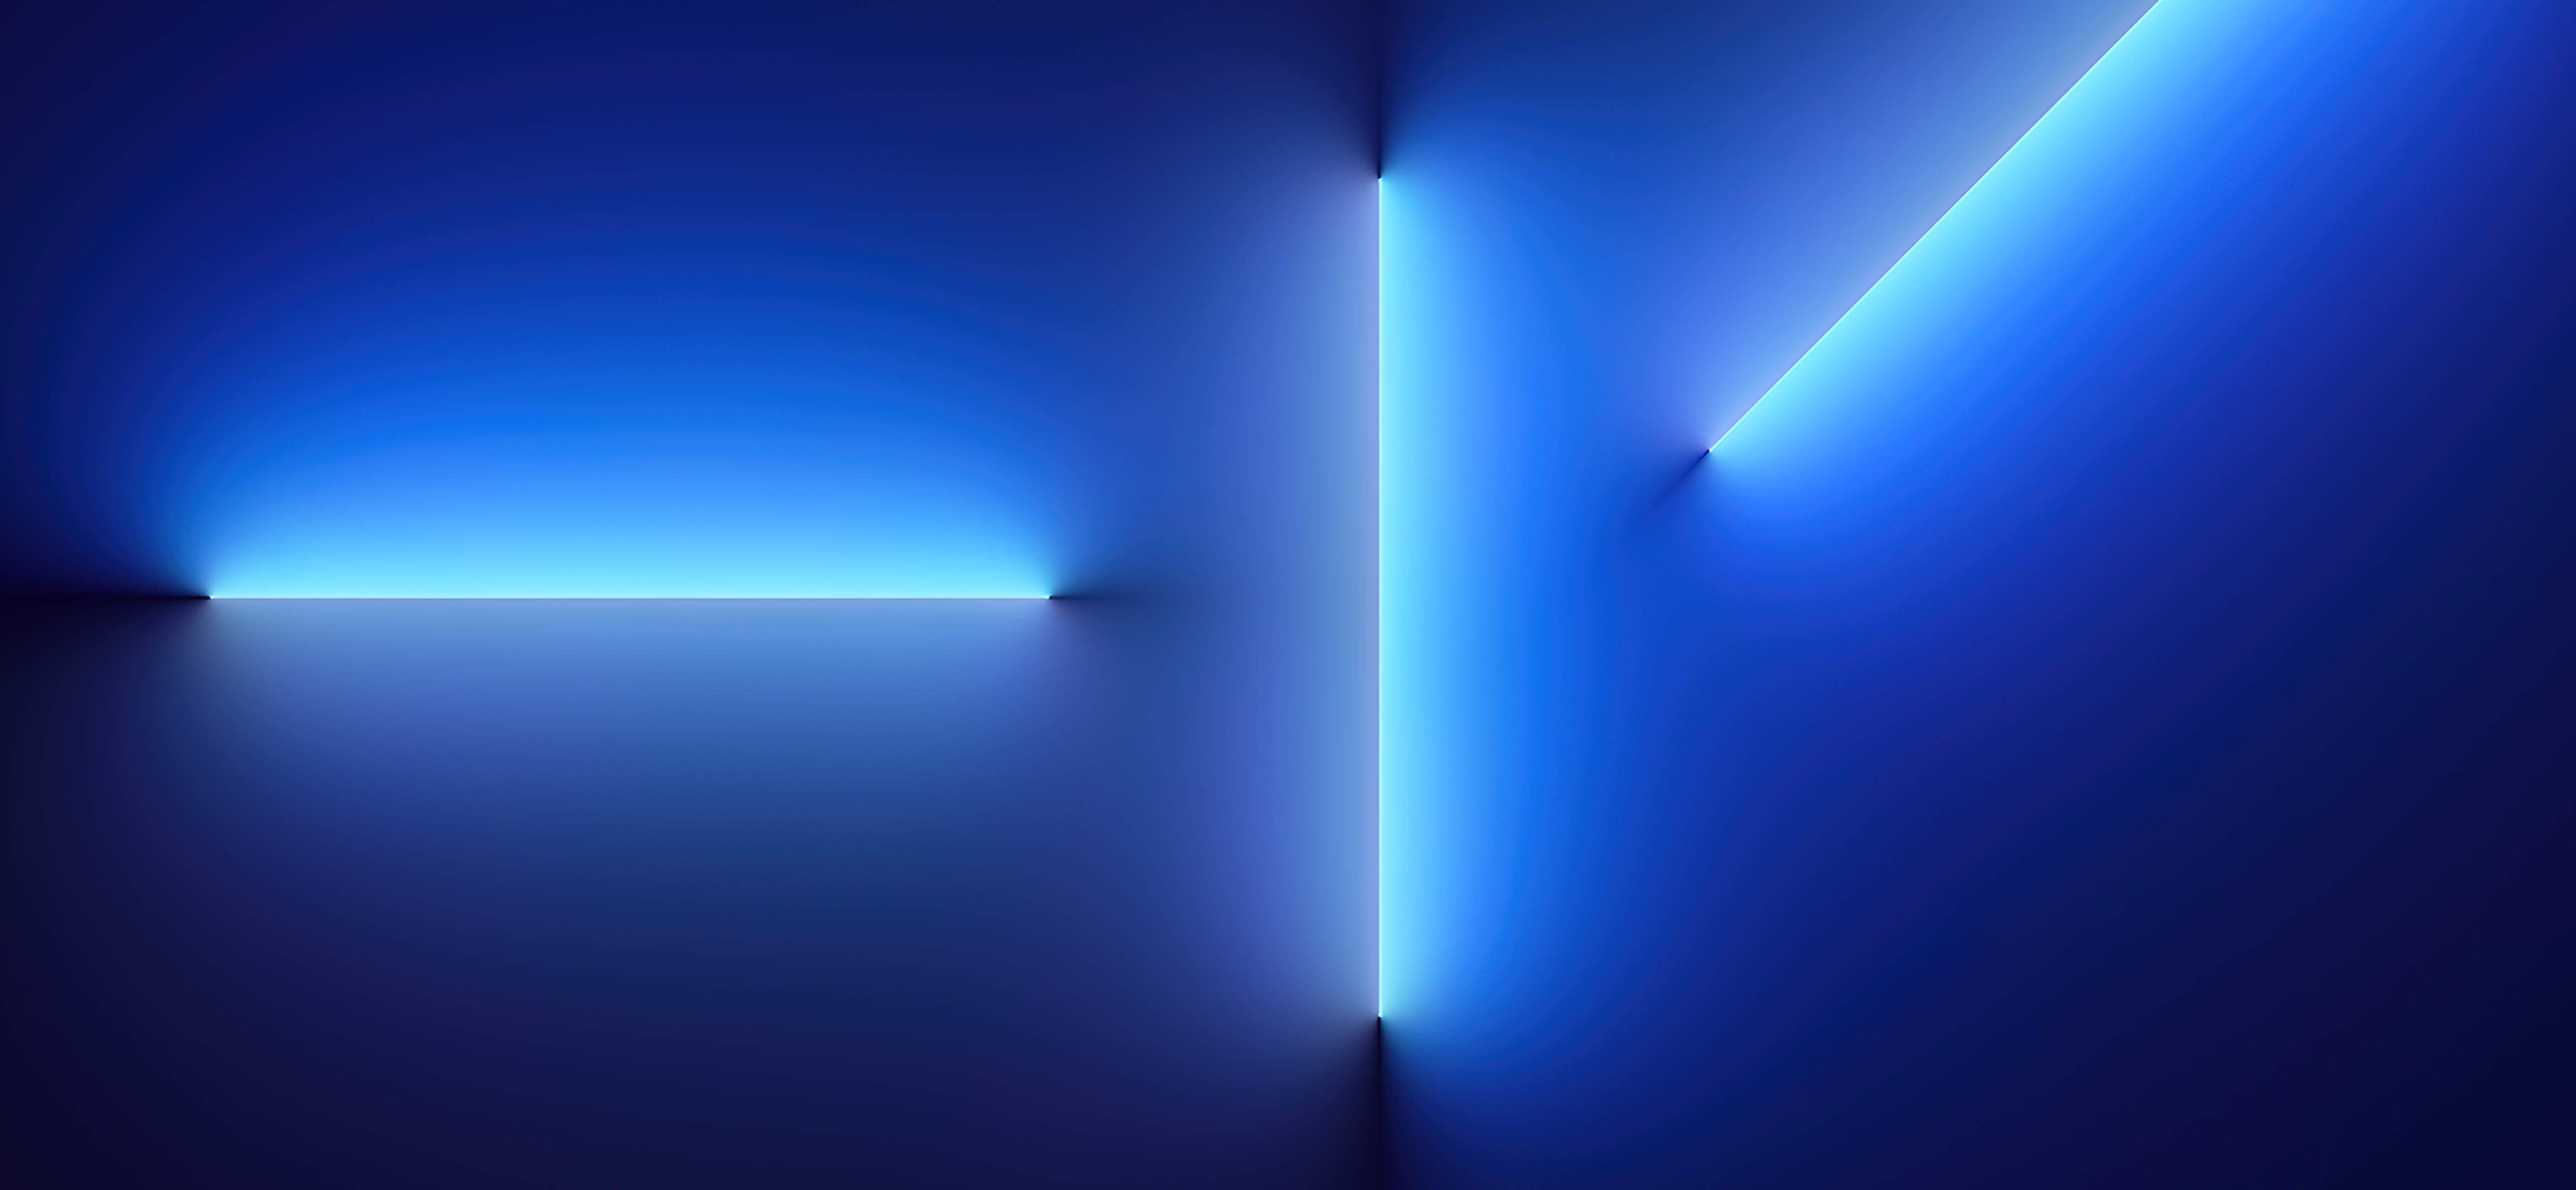  IOS 15 Hintergrundbild 4674x2160. iPhone 13 Pro Wallpaper 4K, iOS Stock, Blue background